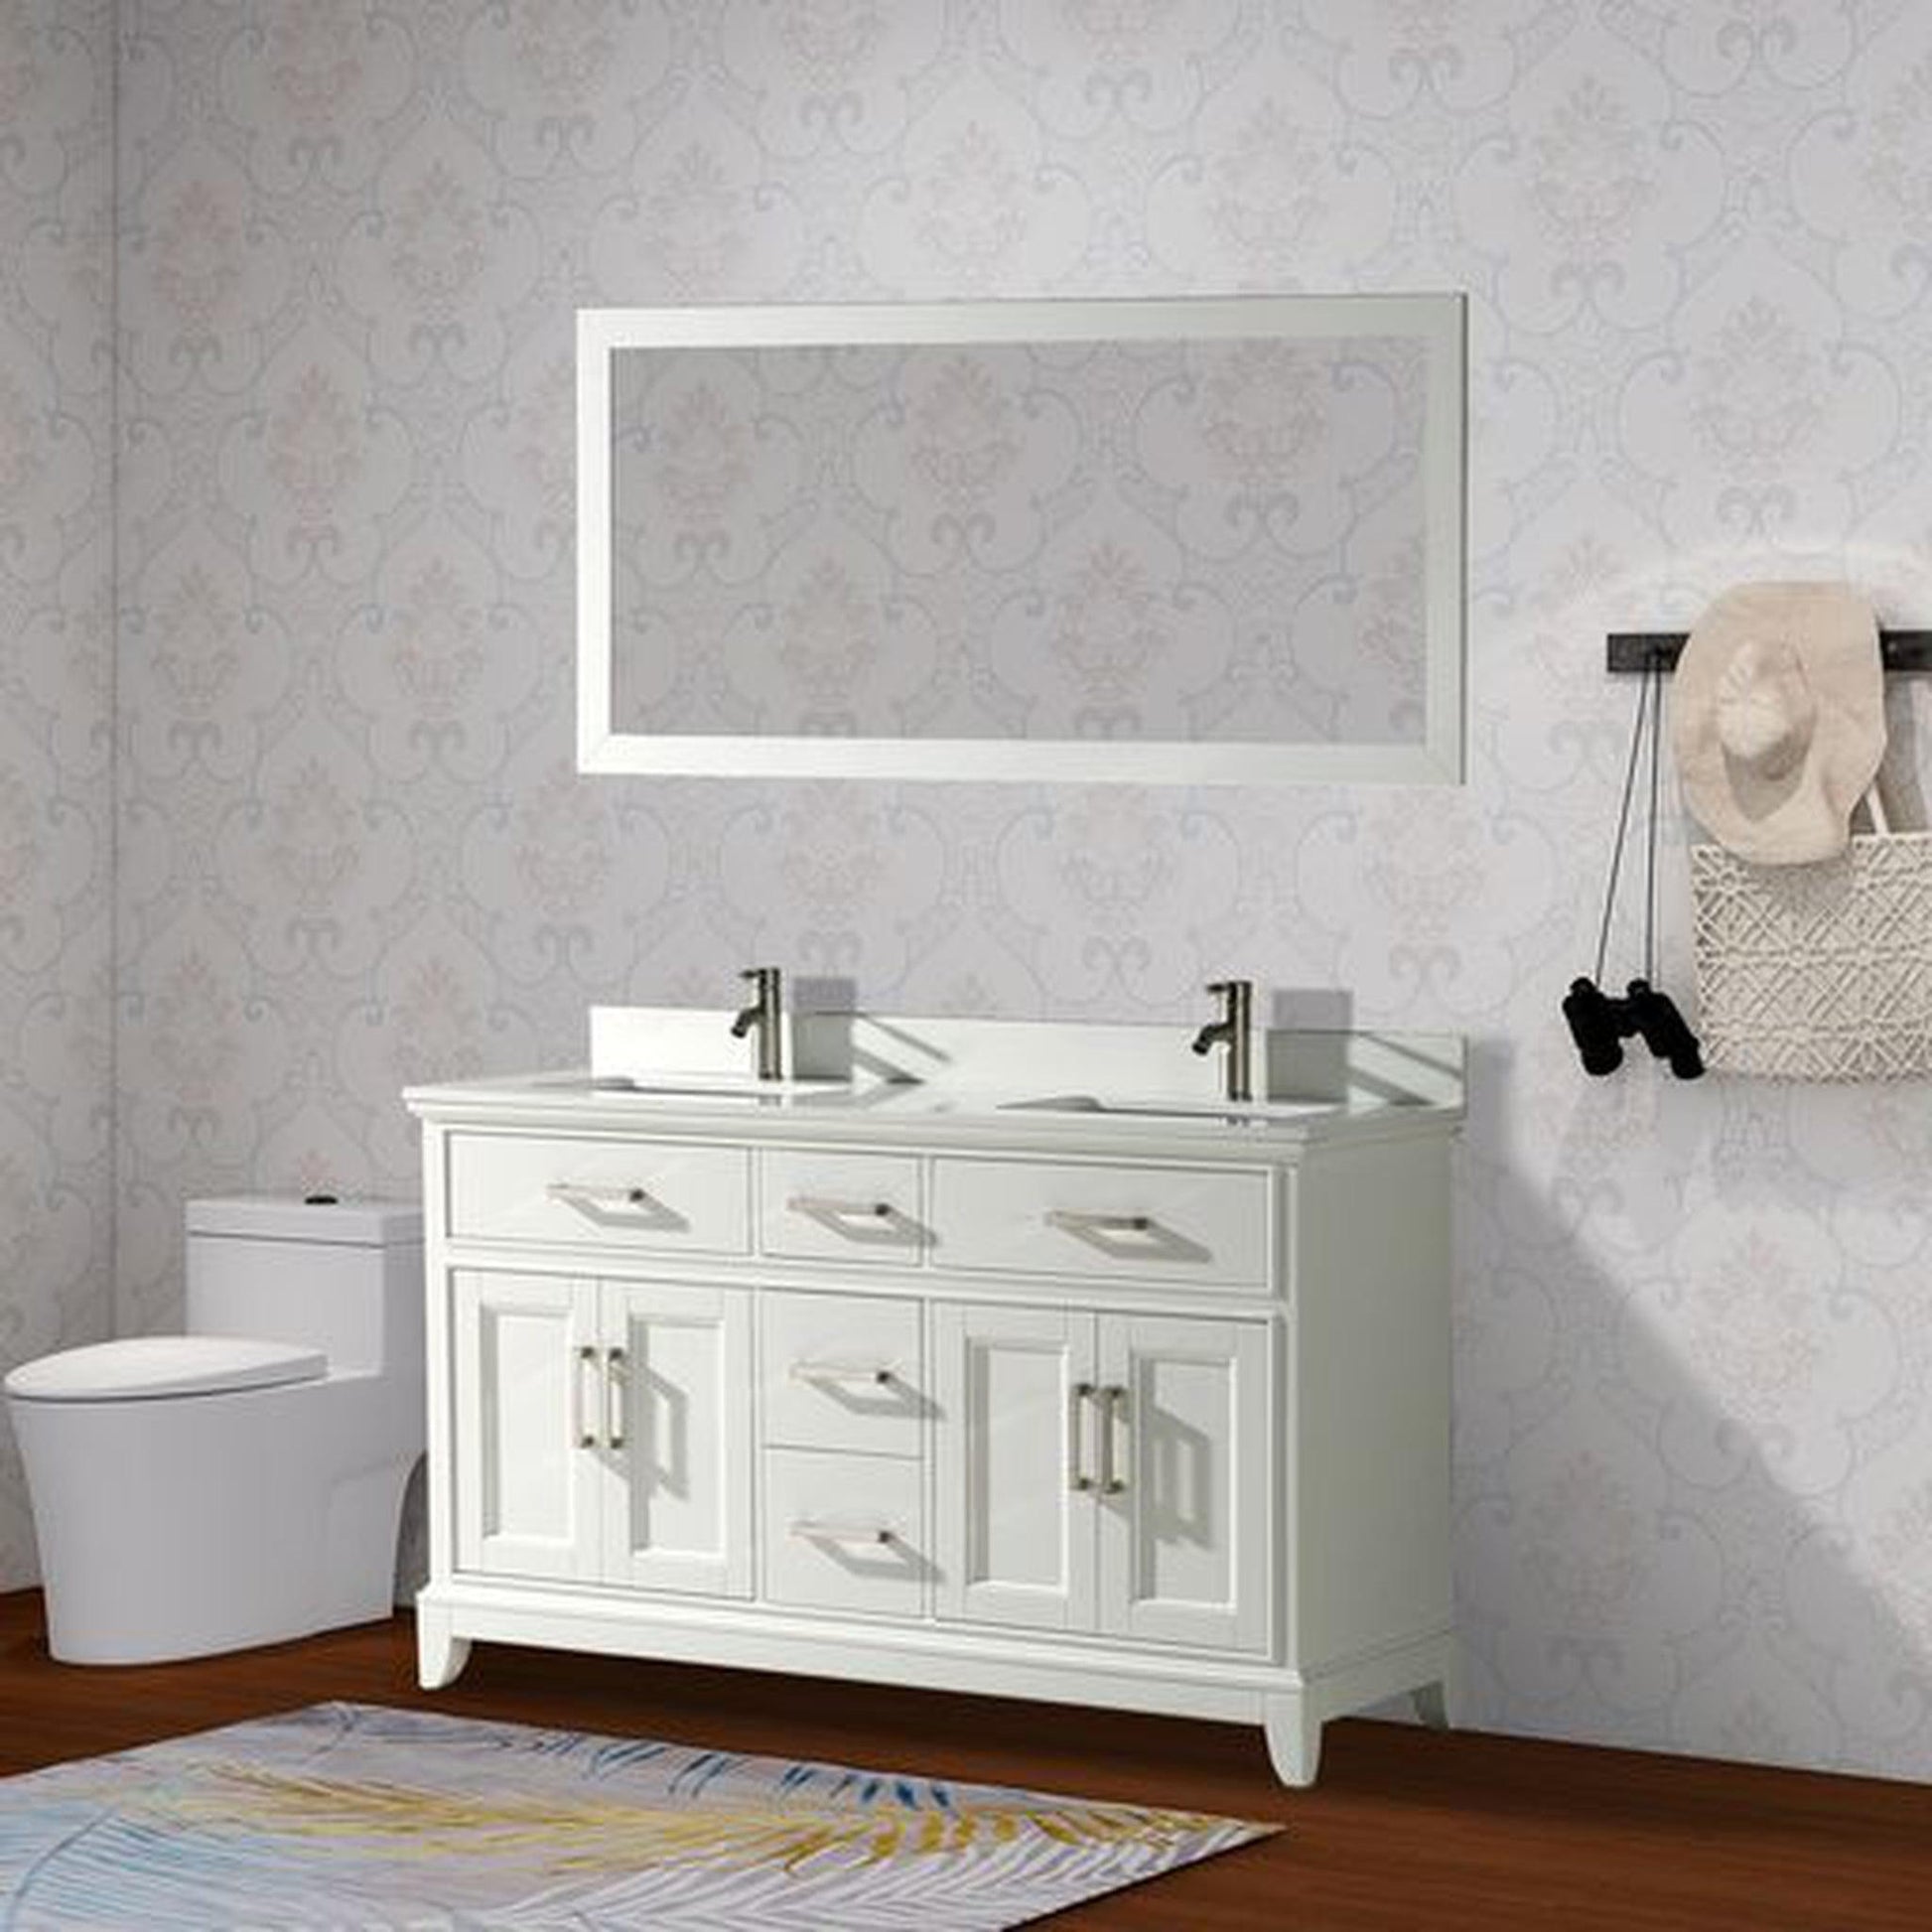 Super Bathroom Storage Cabinet Solid Wood Bathroom Vanity Cabinet Sets with  Mirror - China Bathroom Cabinet, Vanity